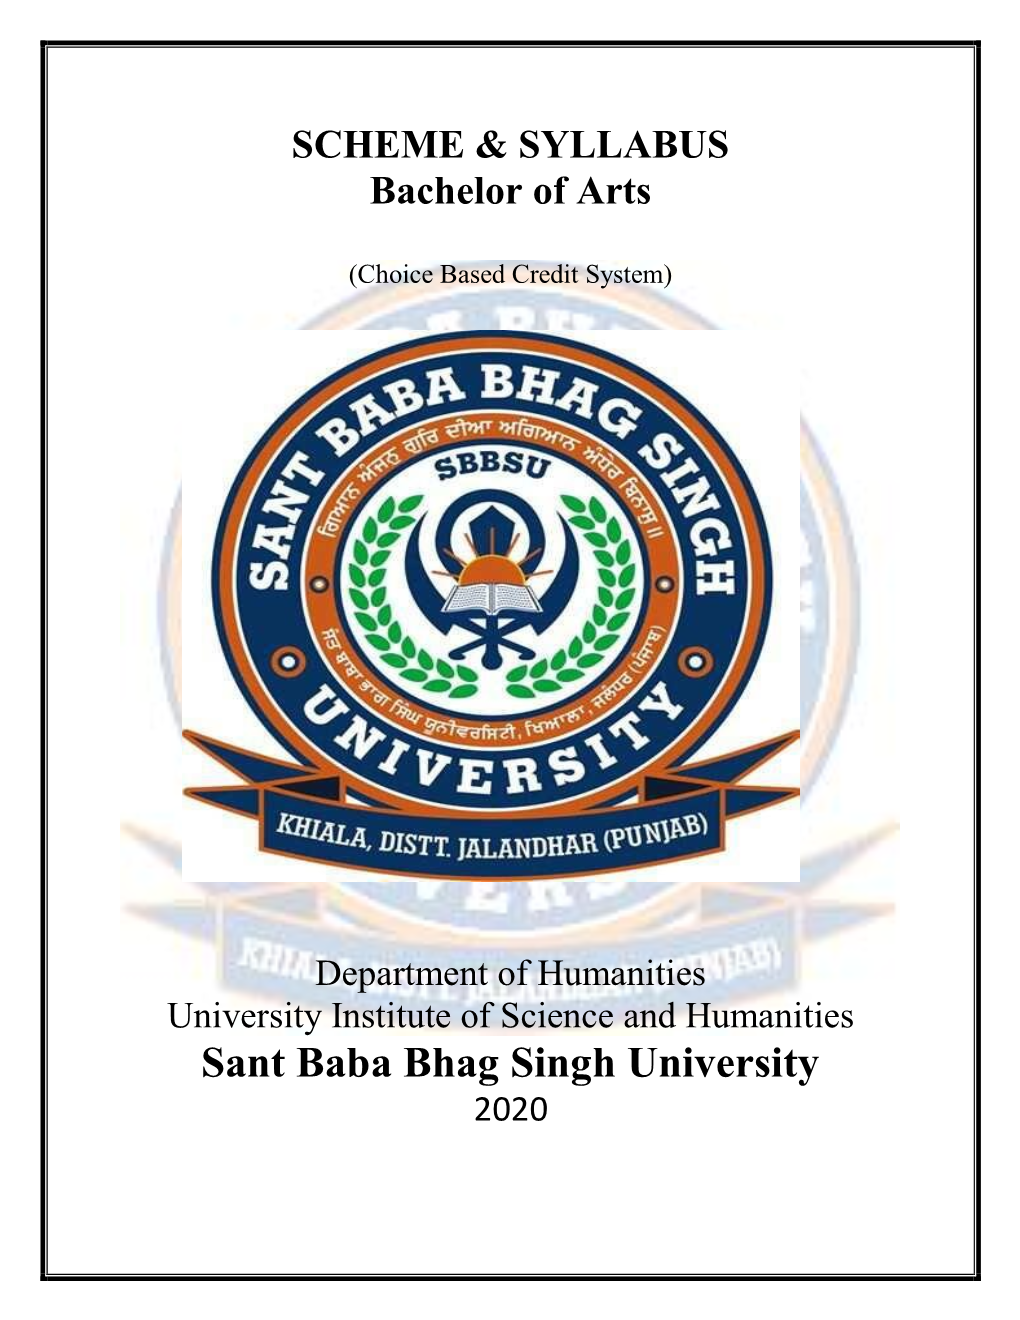 Sant Baba Bhag Singh University 2020